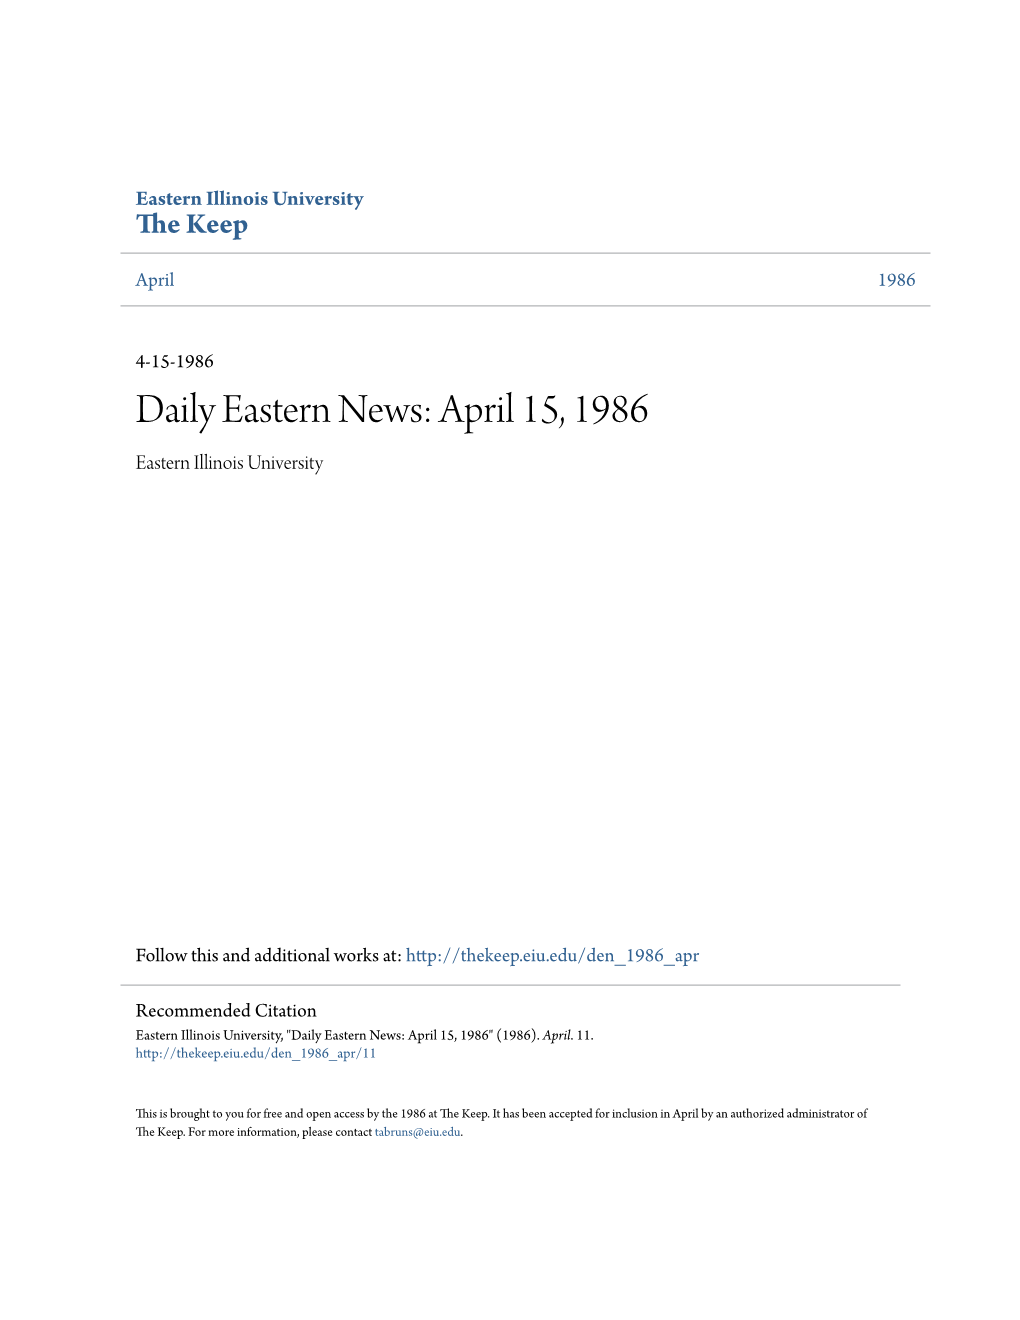 Stern News: April 15, 1986 Eastern Illinois University